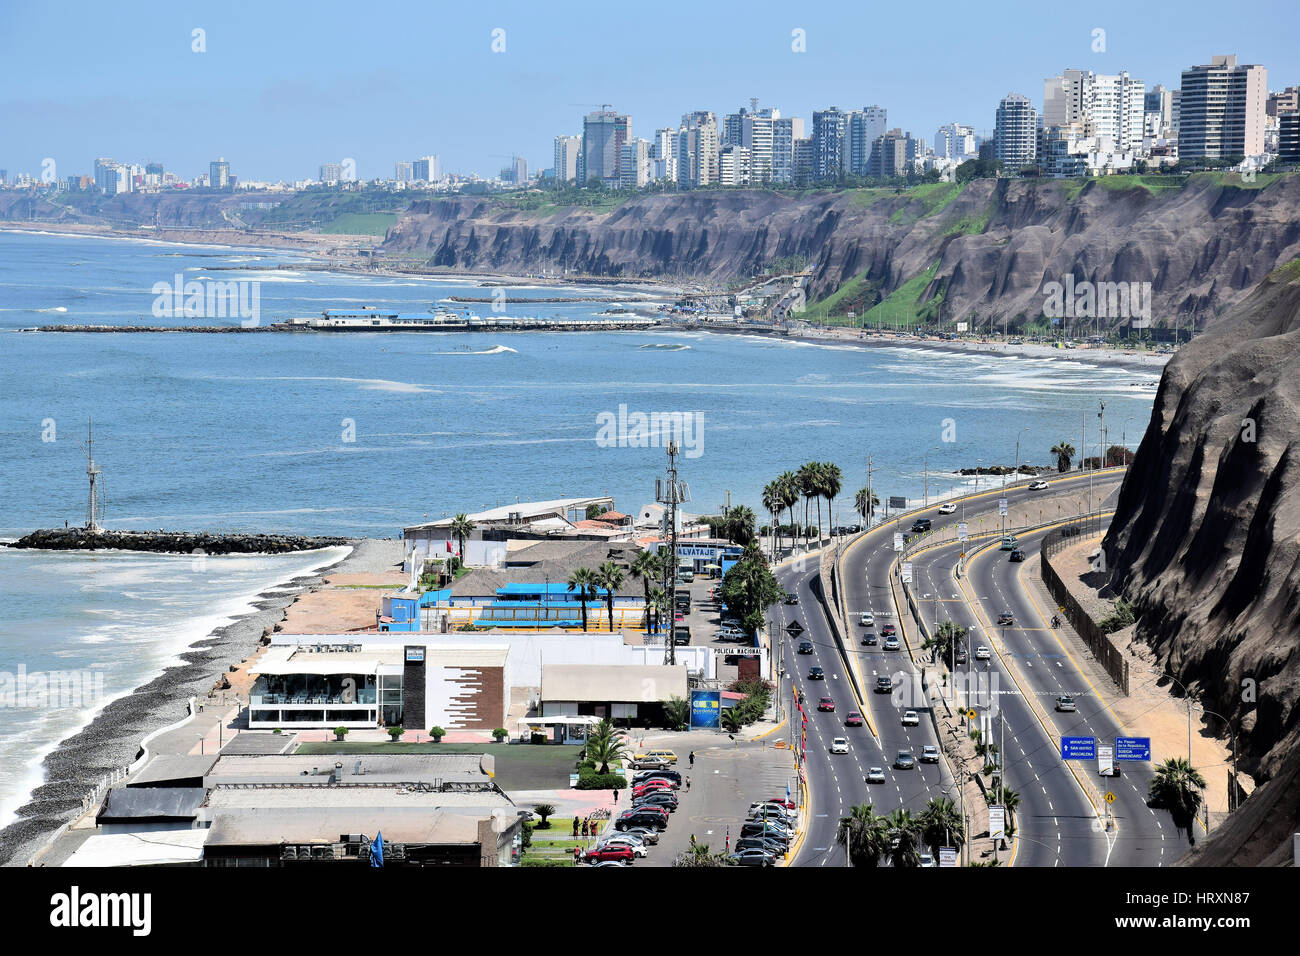 Coastline in Barranco a district in the south of Lima, Peru Stock Photo